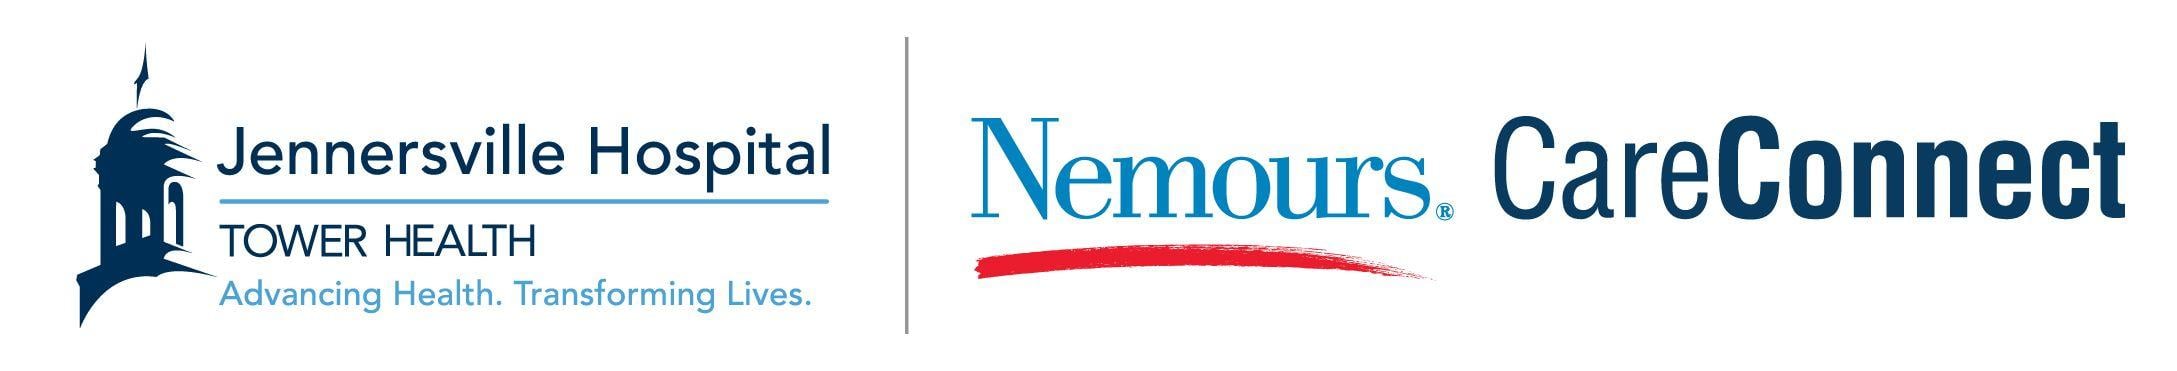 Nemours Logo - Nemours CareConnect | Jennersville Hospital | West Grove, PA